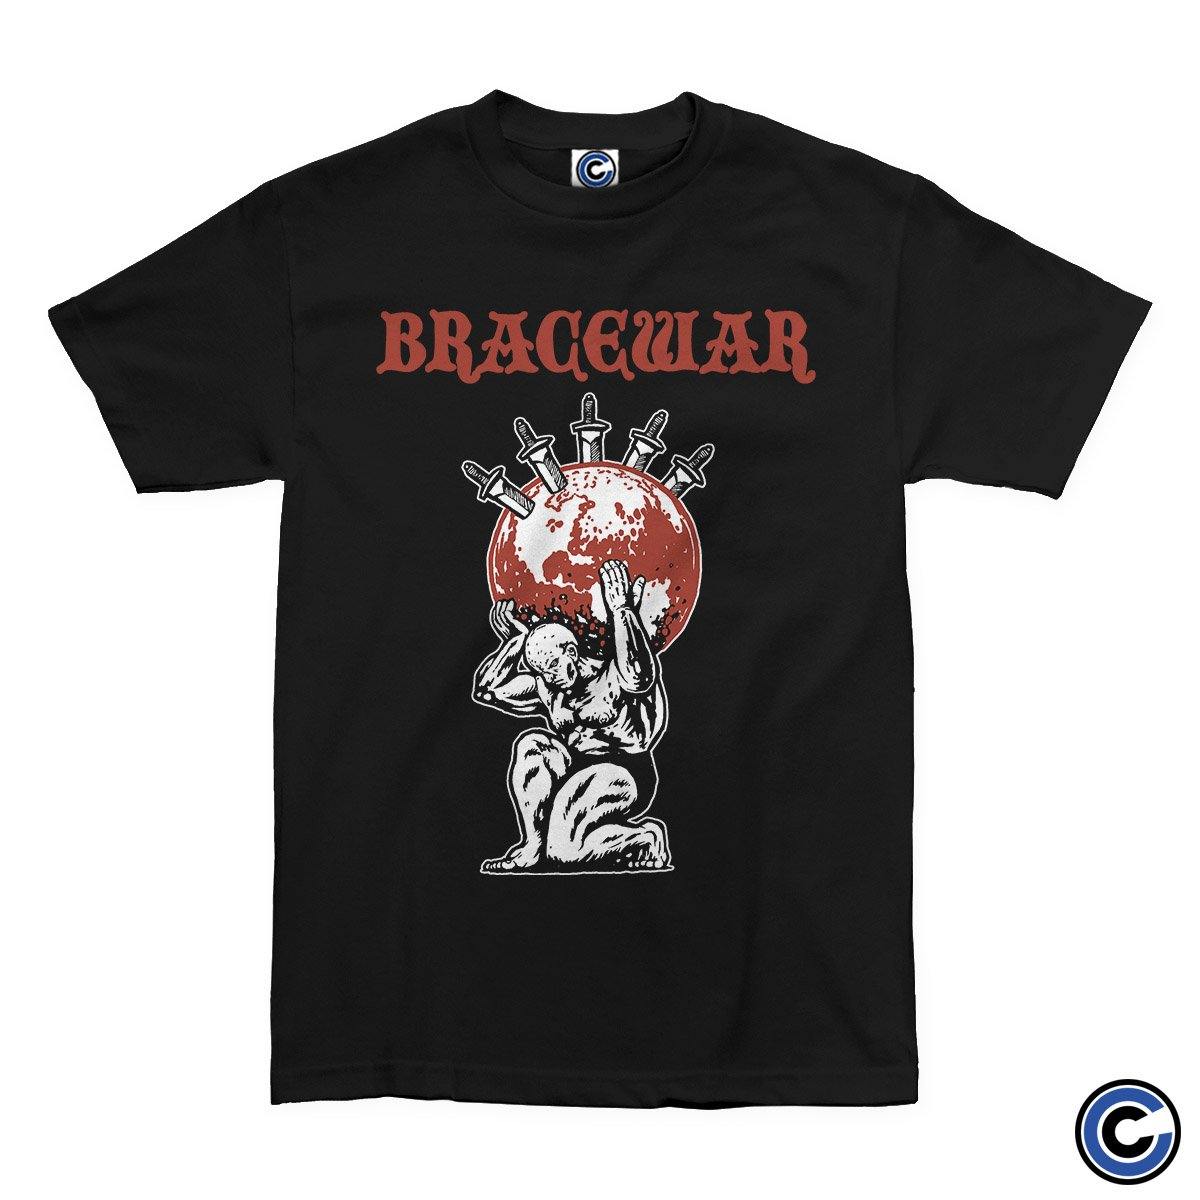 Buy – Bracewar "Crossed Swords" Shirt – Band & Music Merch – Cold Cuts Merch